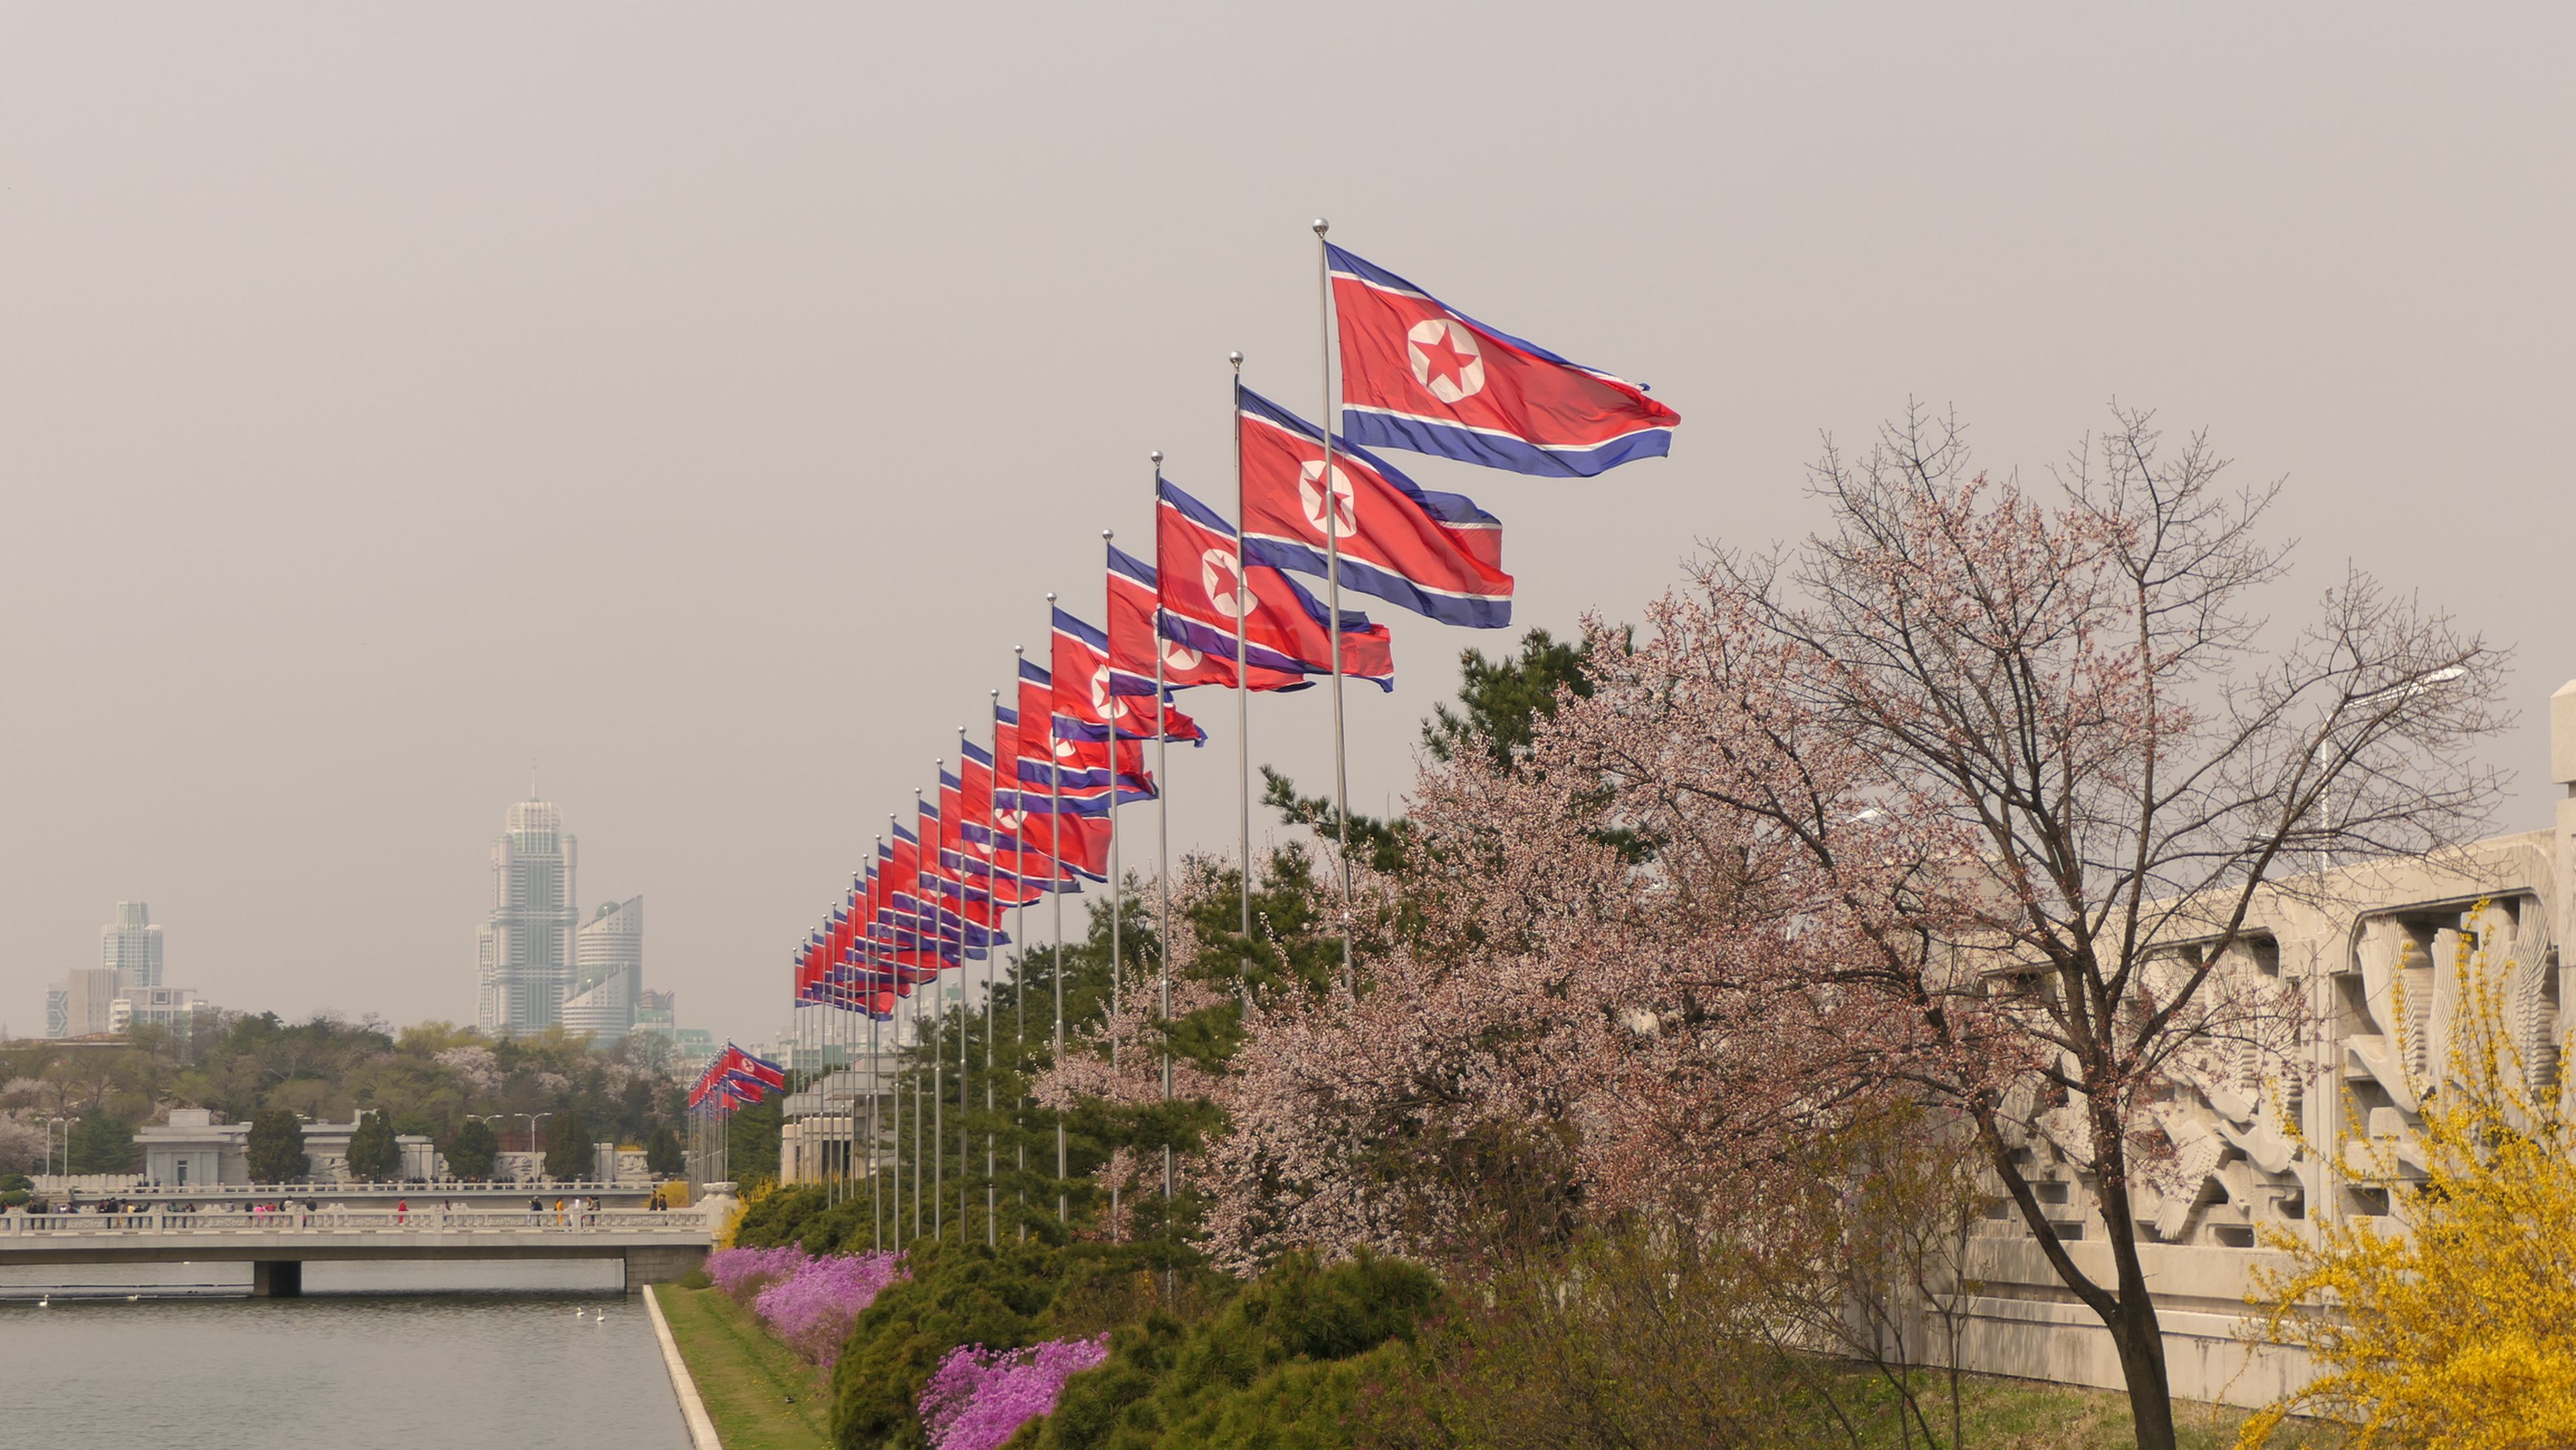 North Korean flags on flagpoles, in Pyongyang, Democratic People's Republic of Korea